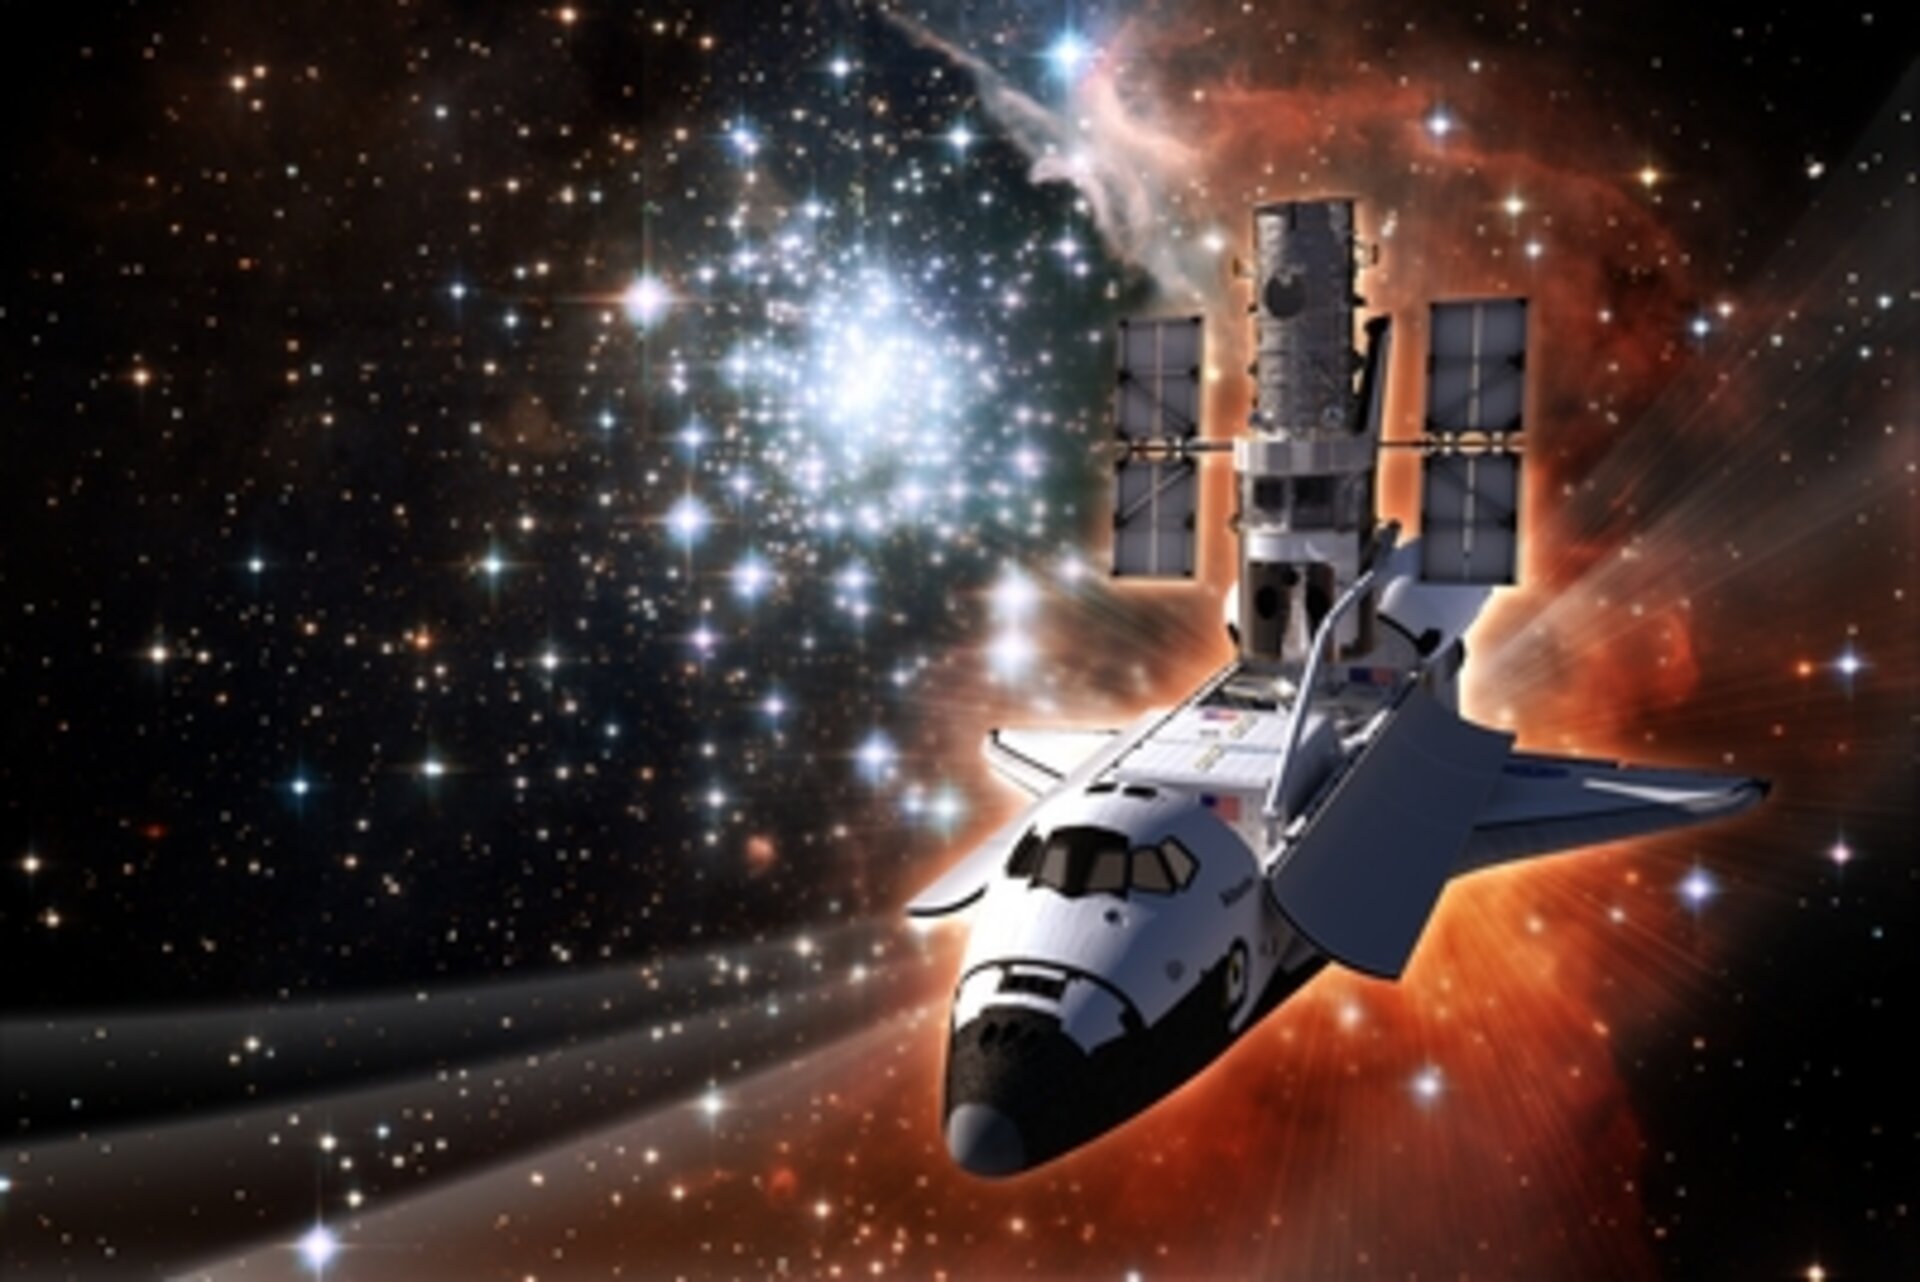 Space Shuttle Atlantis with Hubble